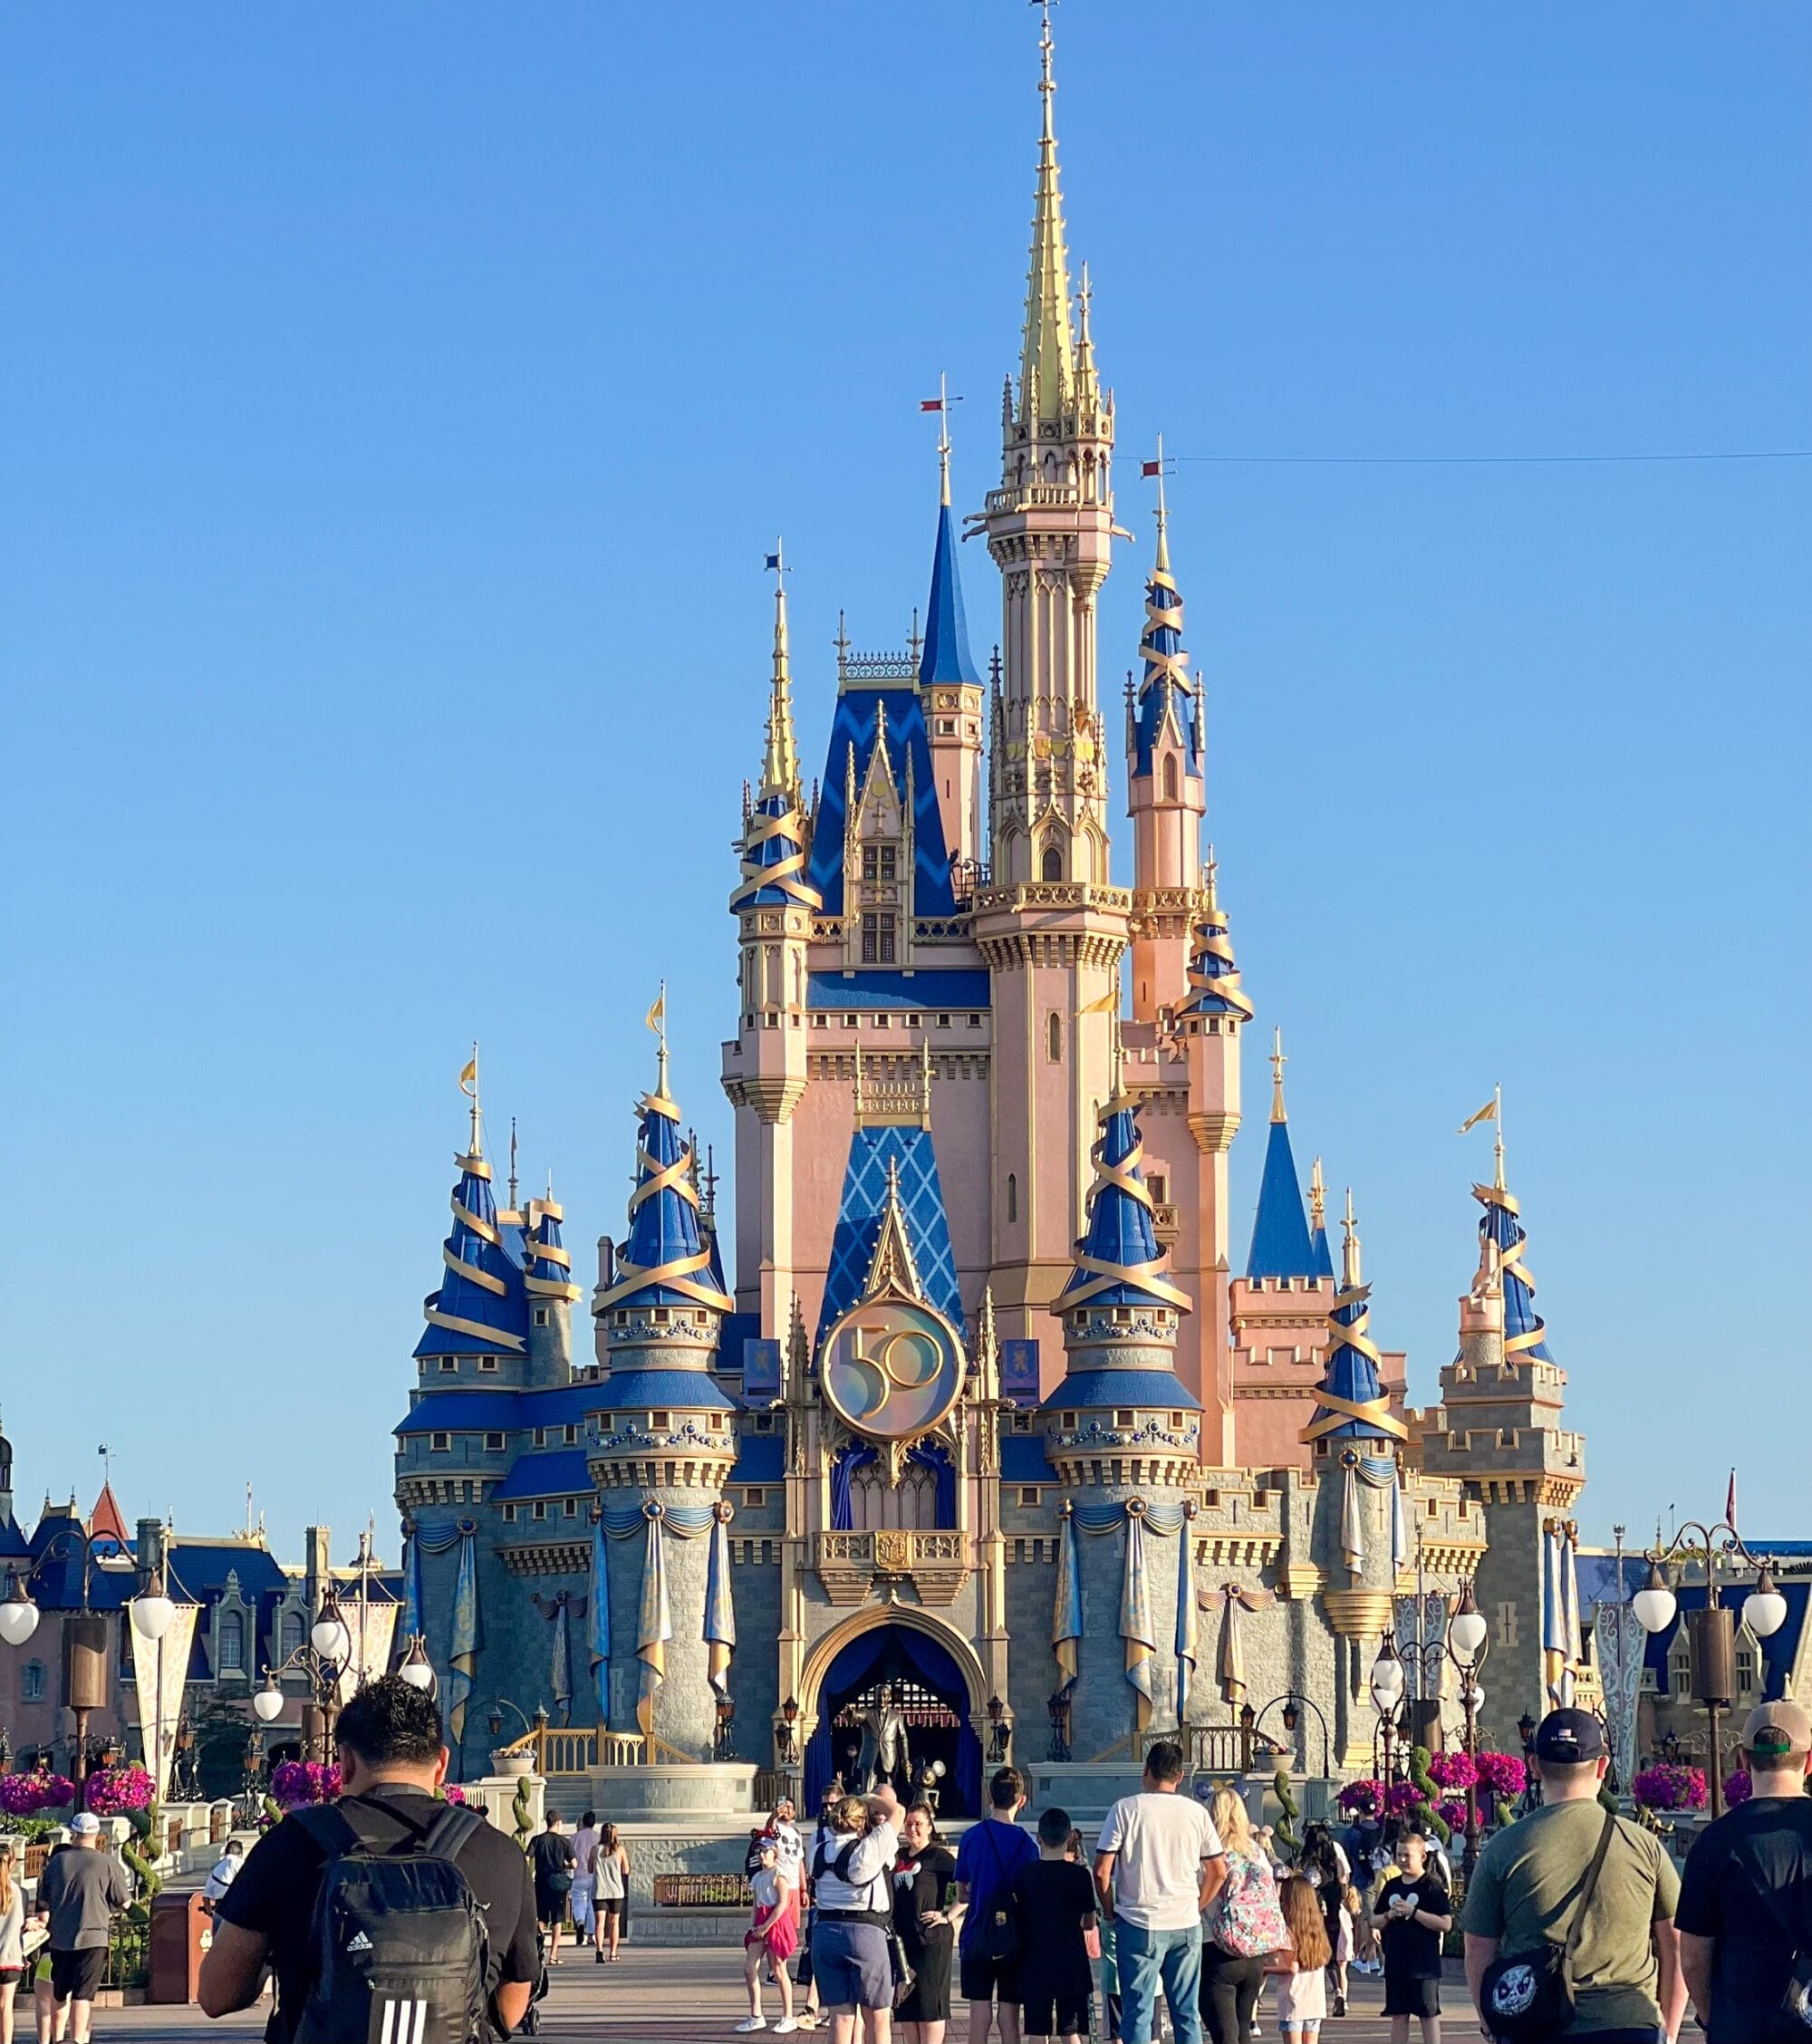 Cinderella's castle at Walt Disney World